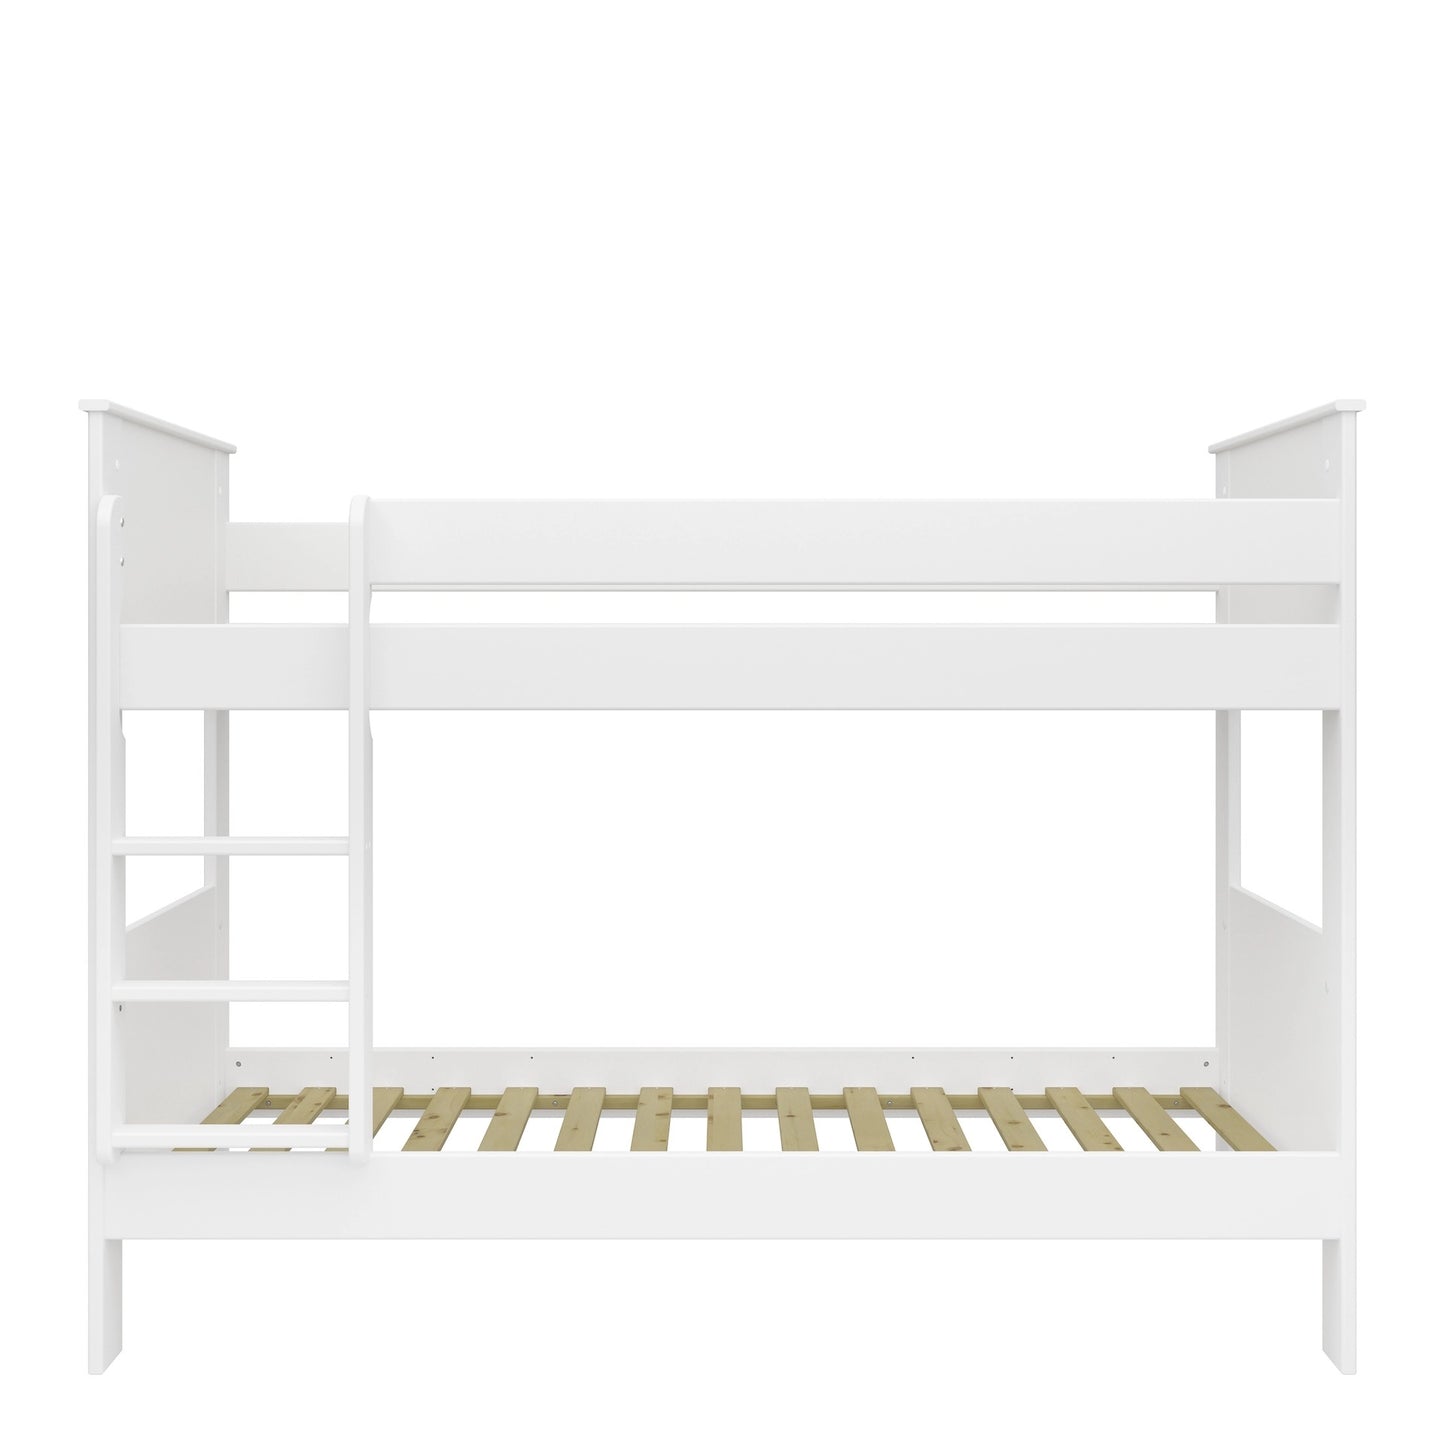 Furniture To Go Alba Bunk Bed White